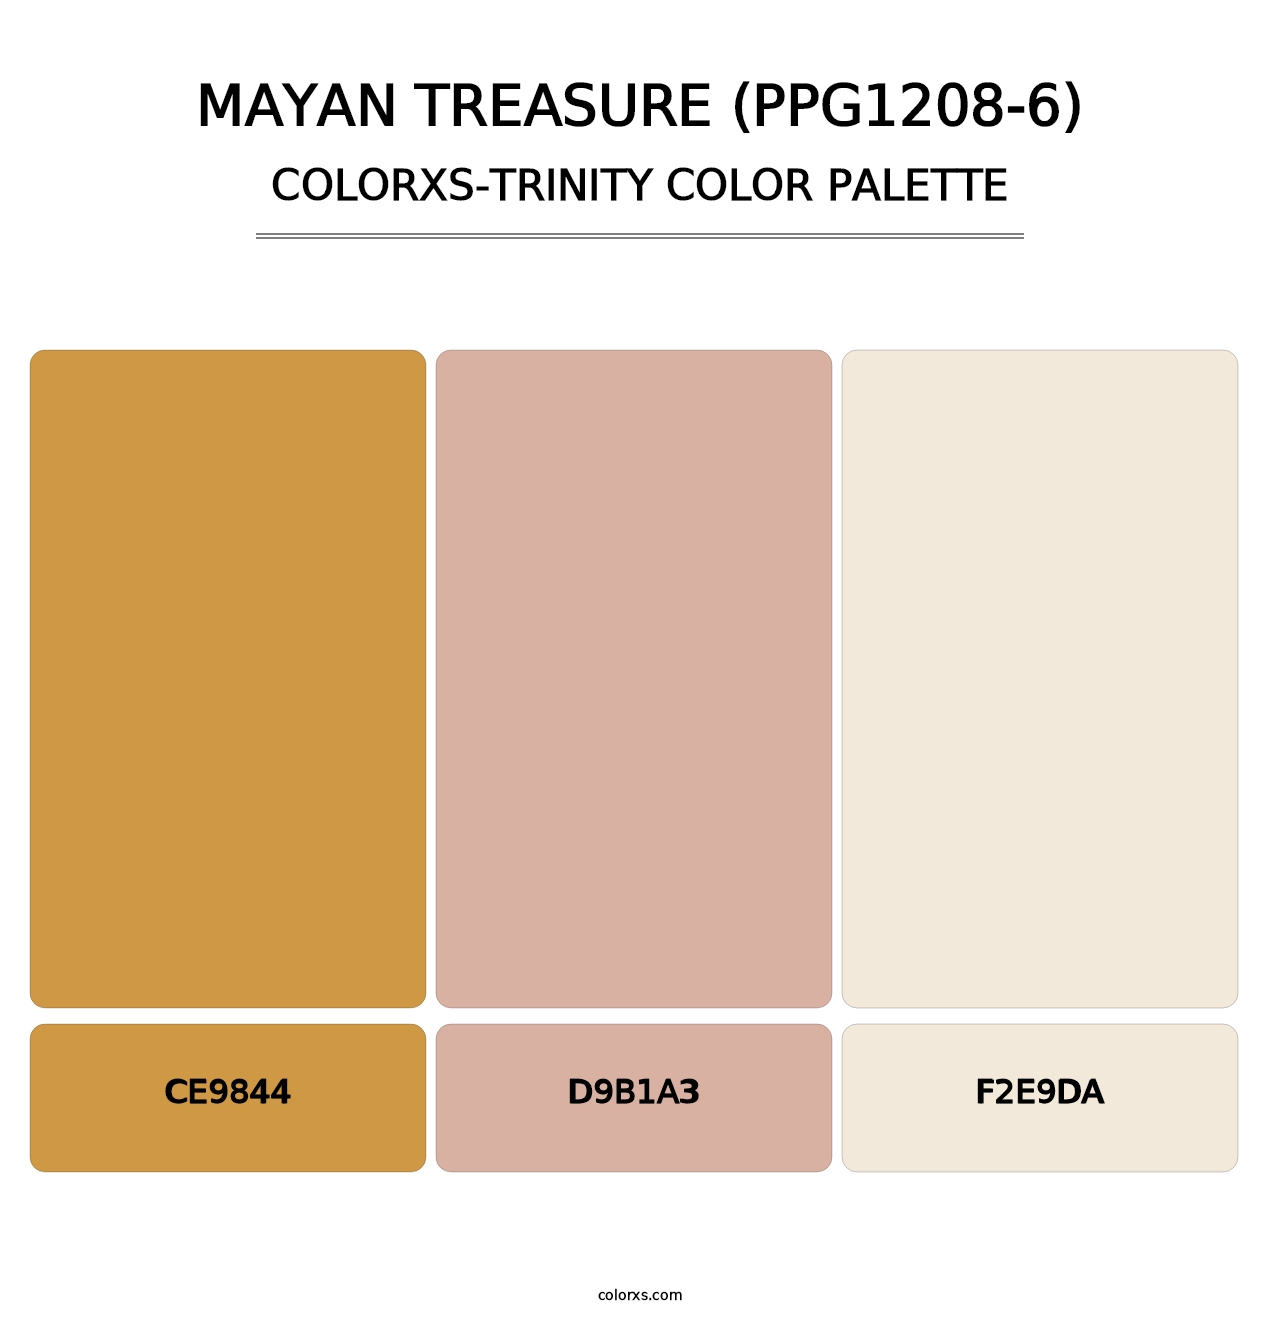 Mayan Treasure (PPG1208-6) - Colorxs Trinity Palette